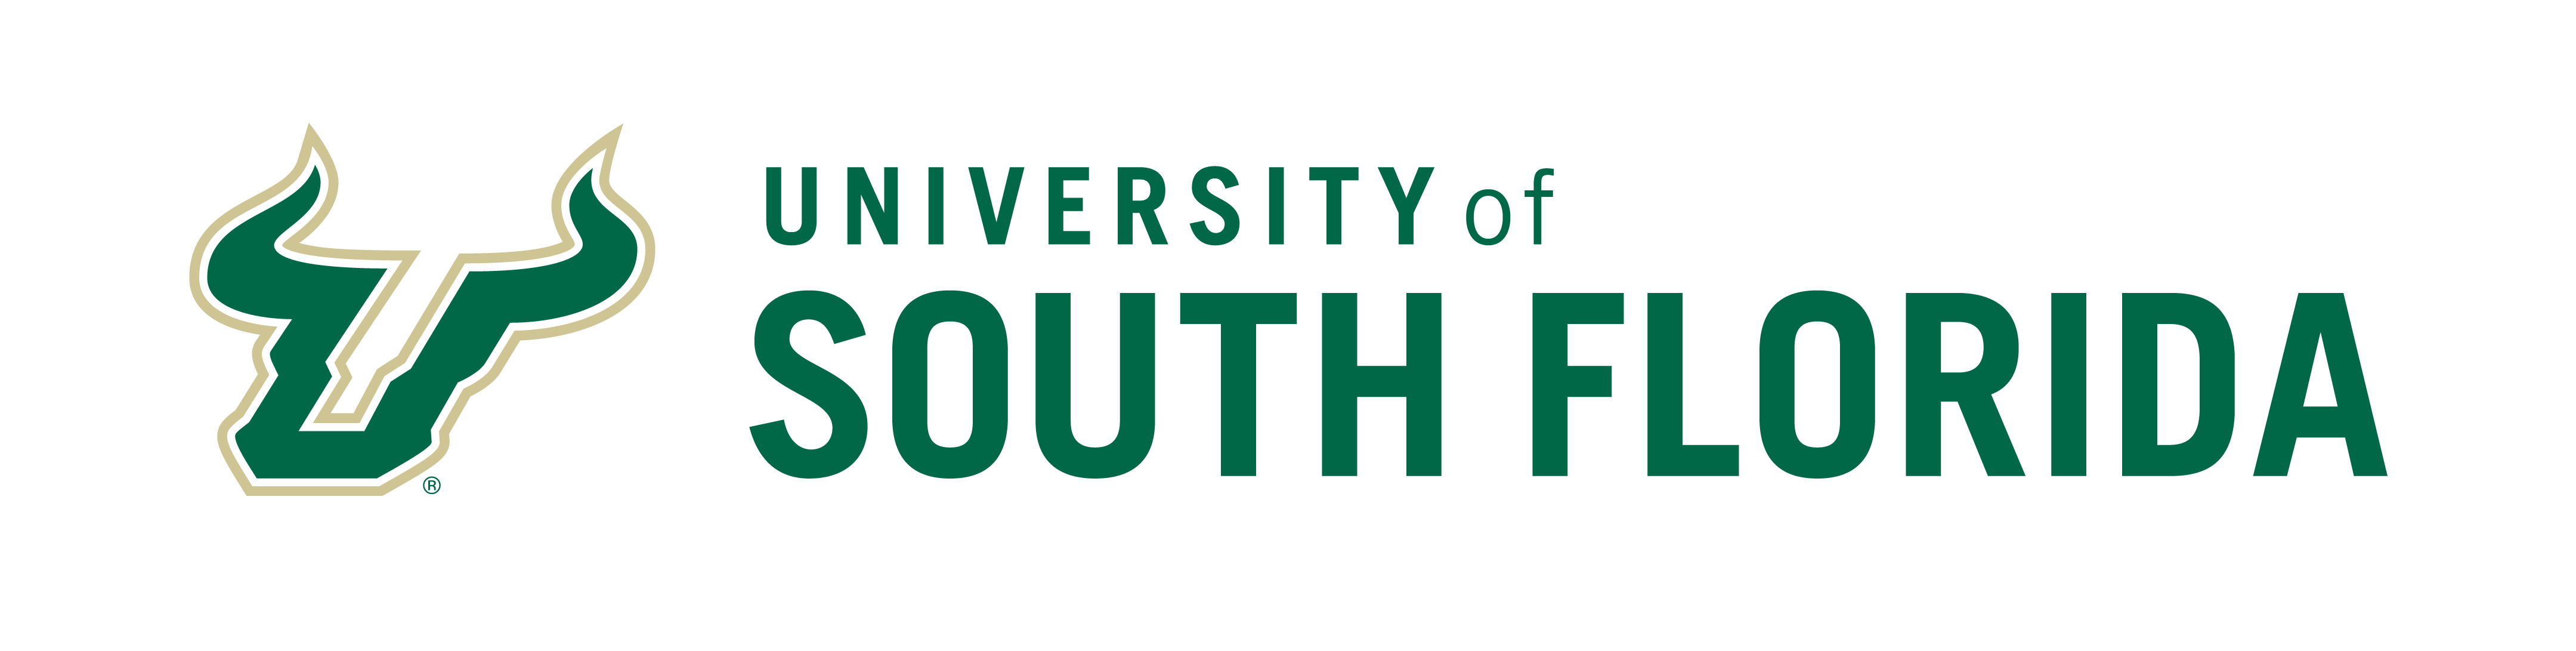 University of South Florida Footer Logo